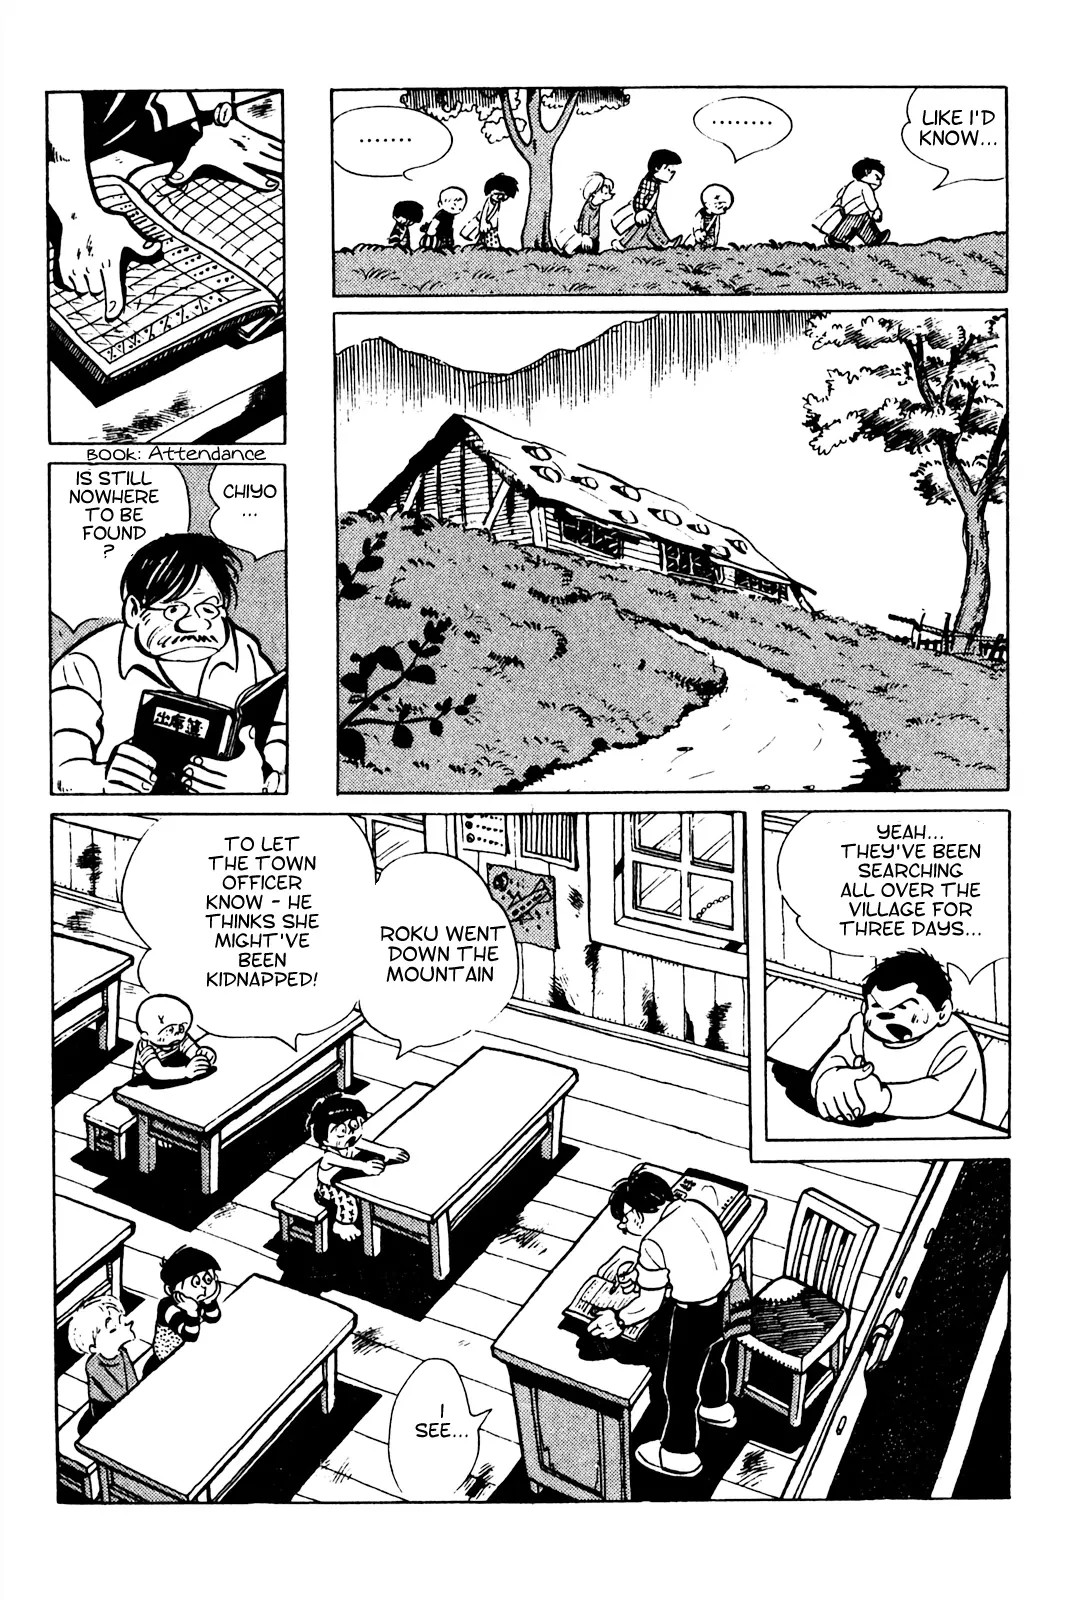 Tetsuya Chiba Short Stories - Shojo Manga - 20 page 19-9763b42d